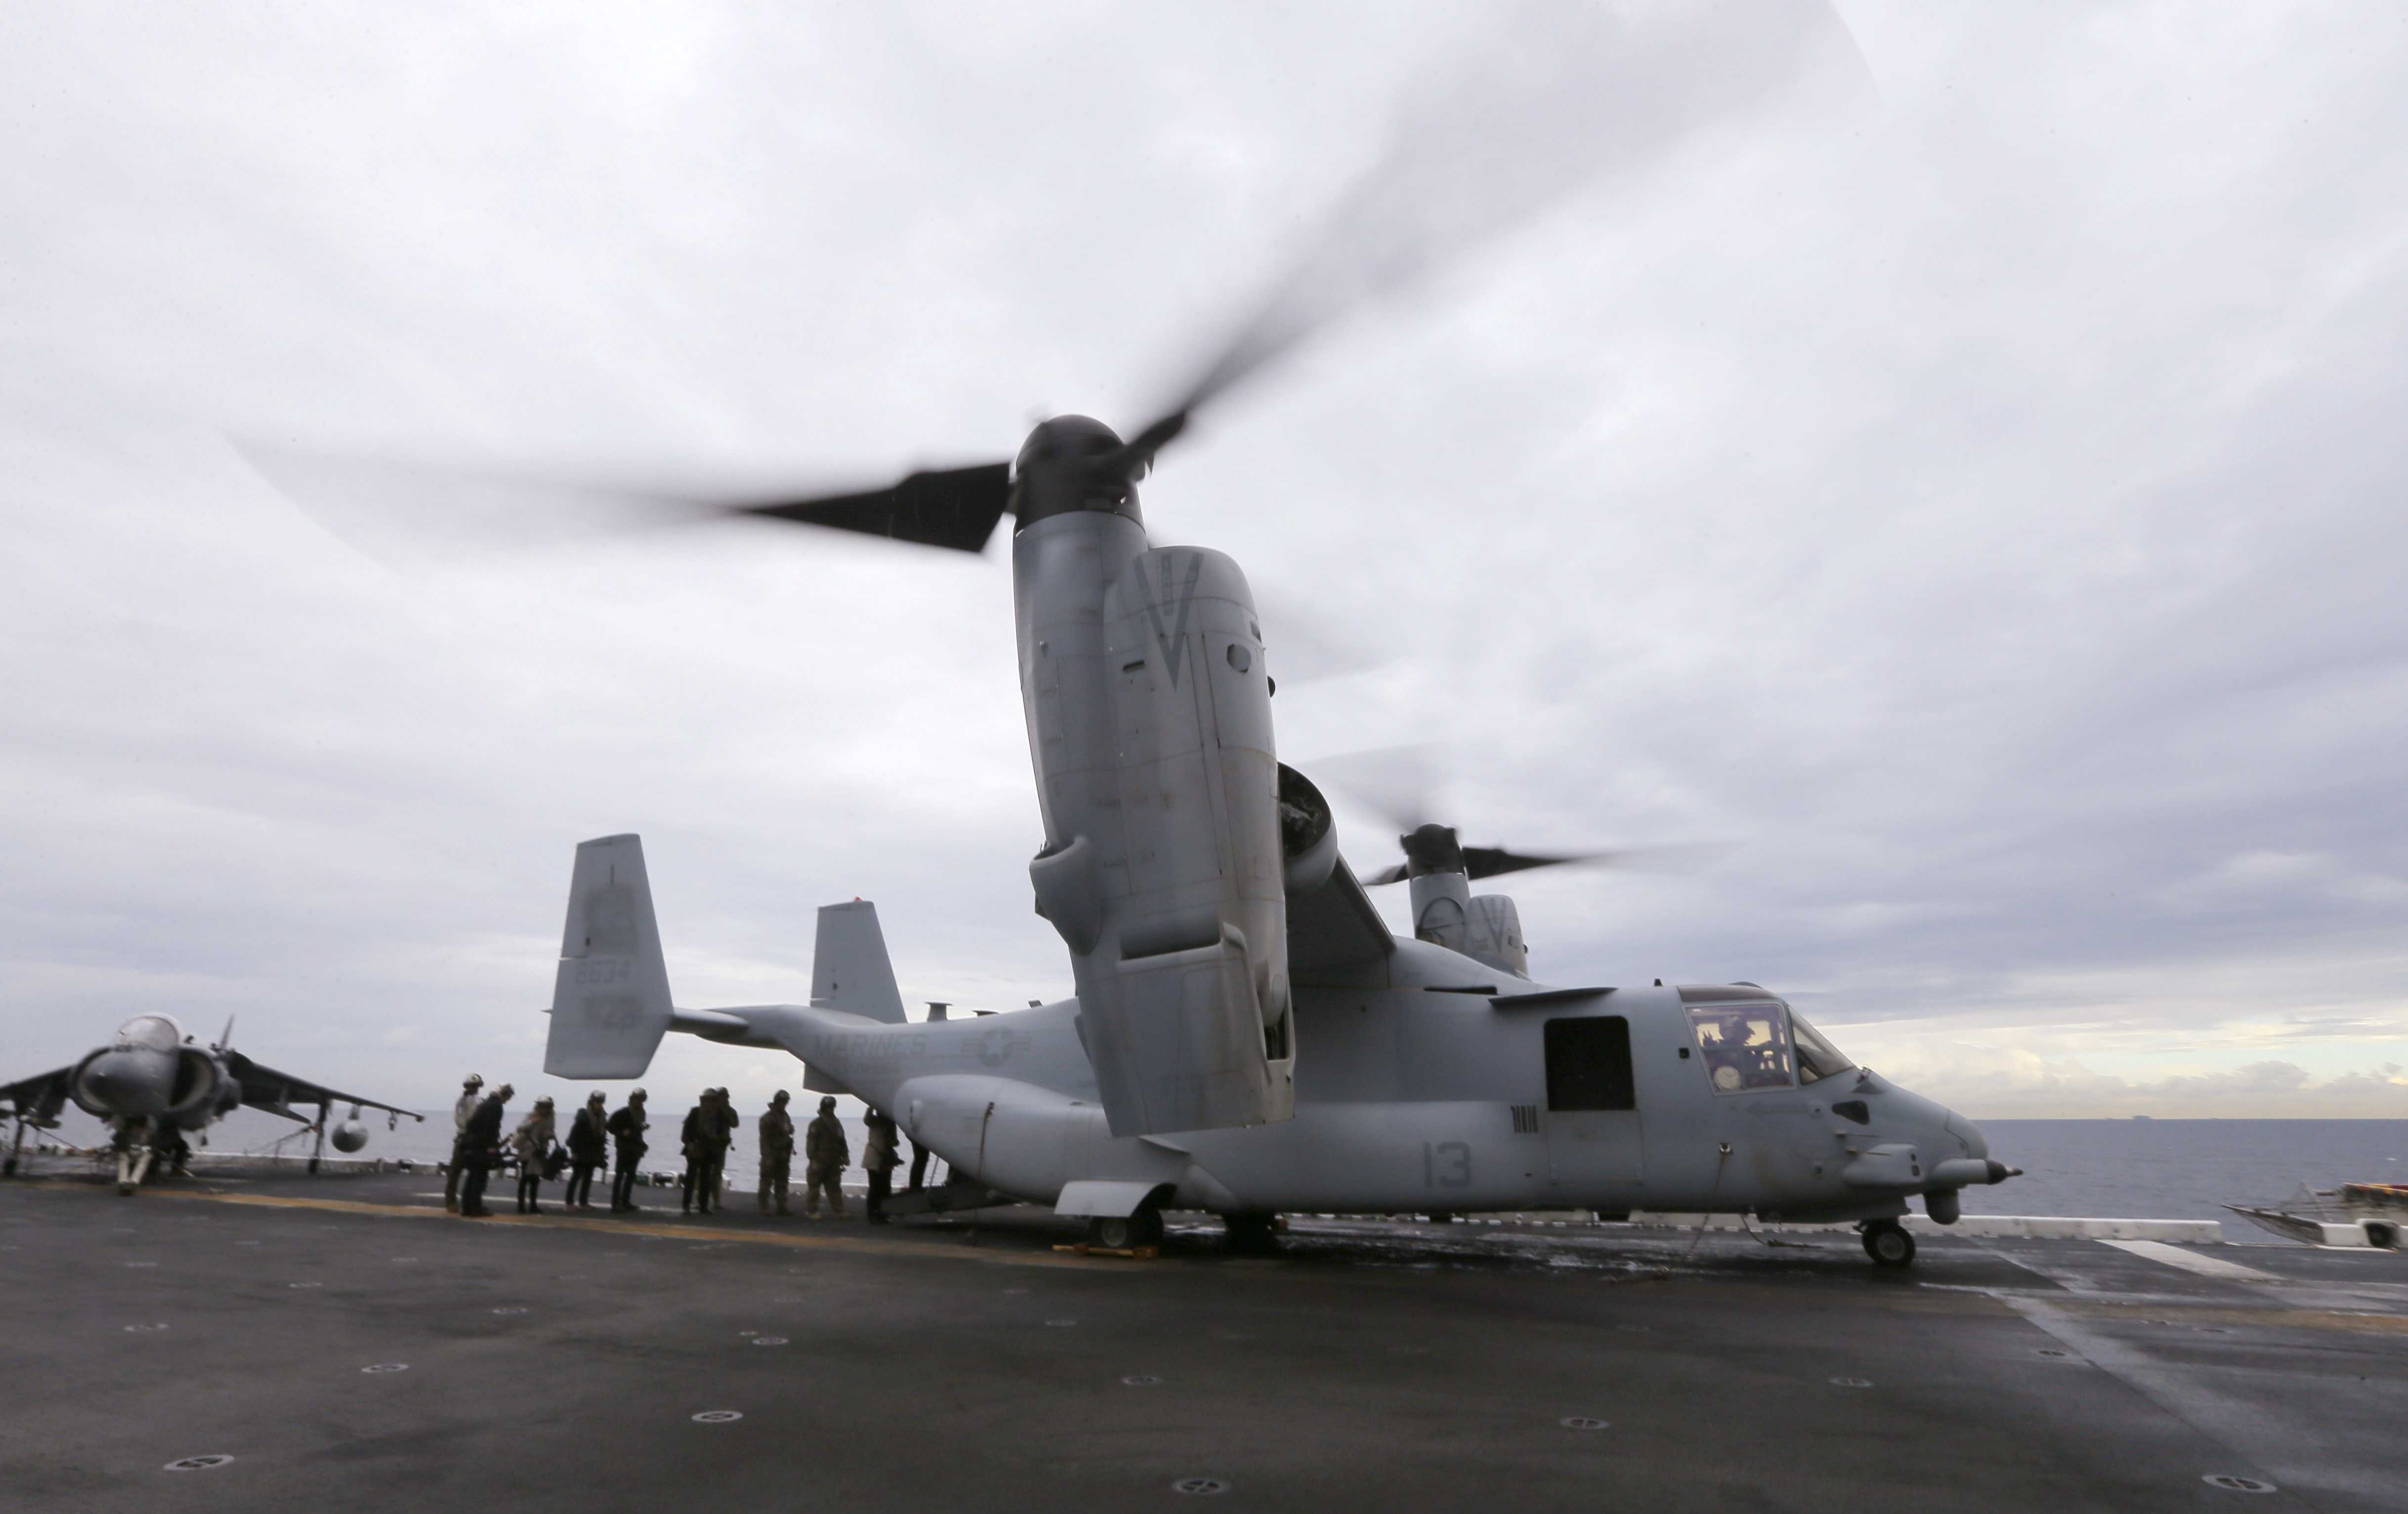 US Army Heli-Plane Crashes off Australian Coast